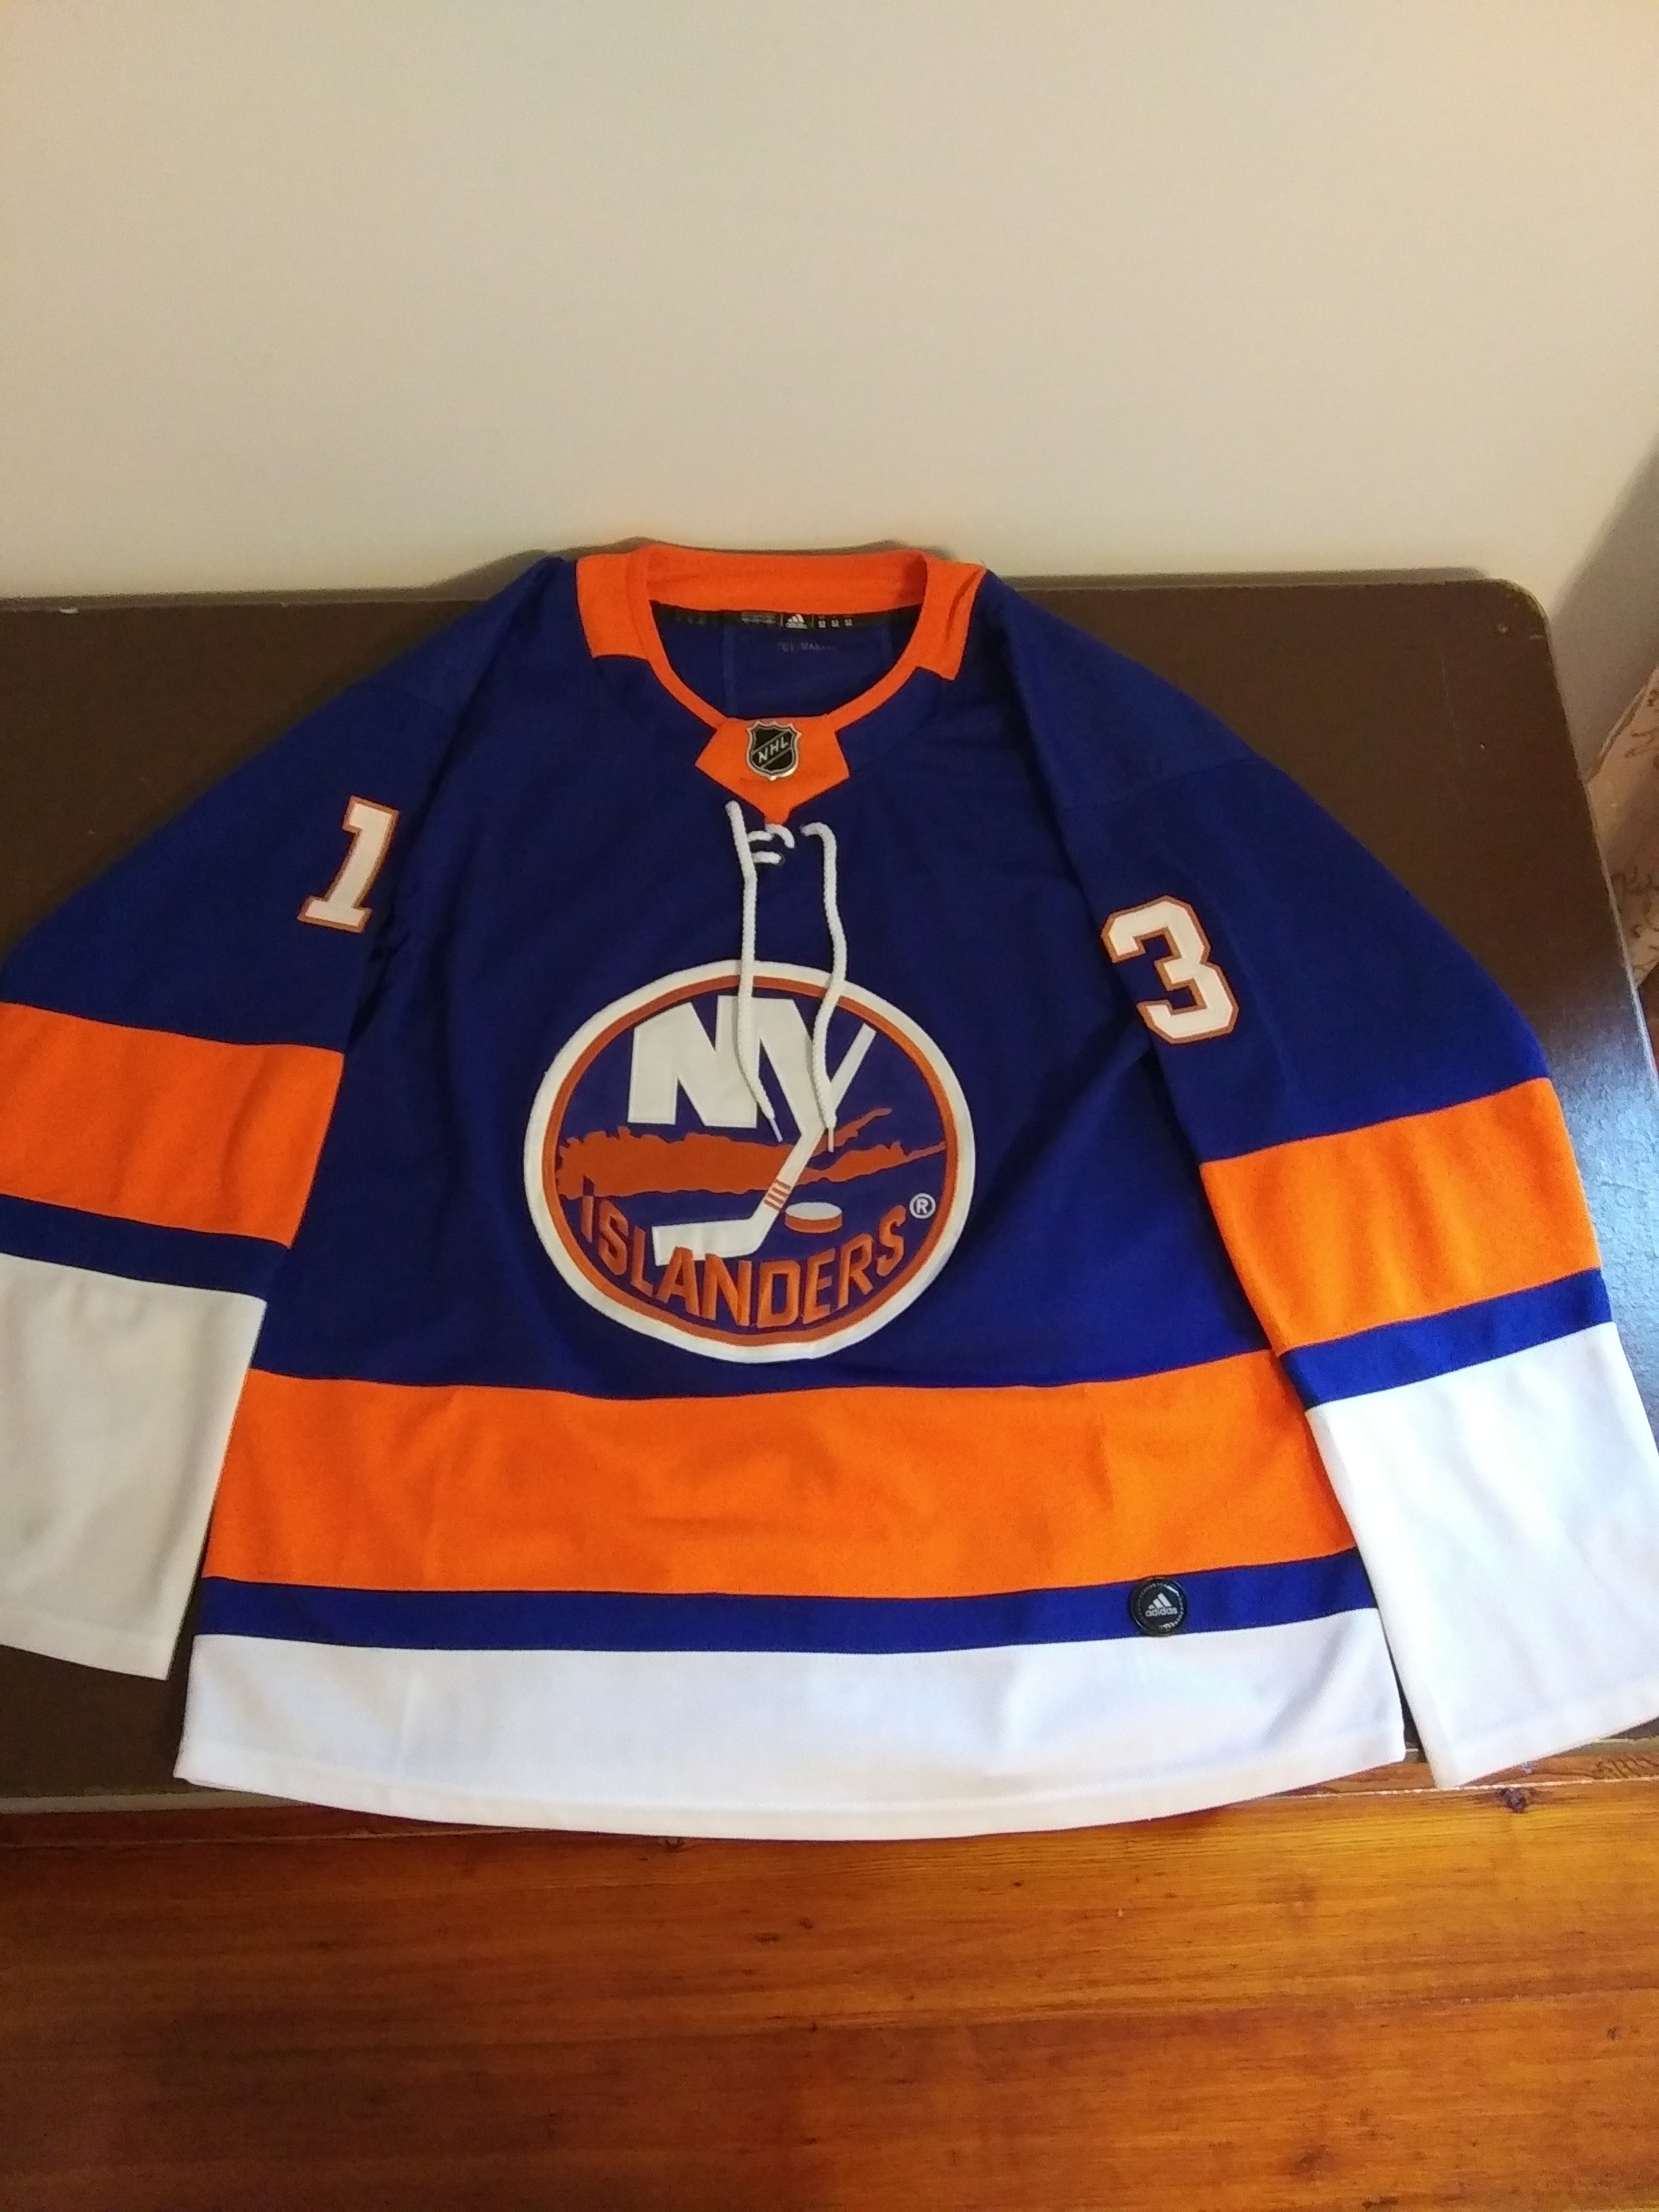 New York Islanders Barzal Jersey Size 50